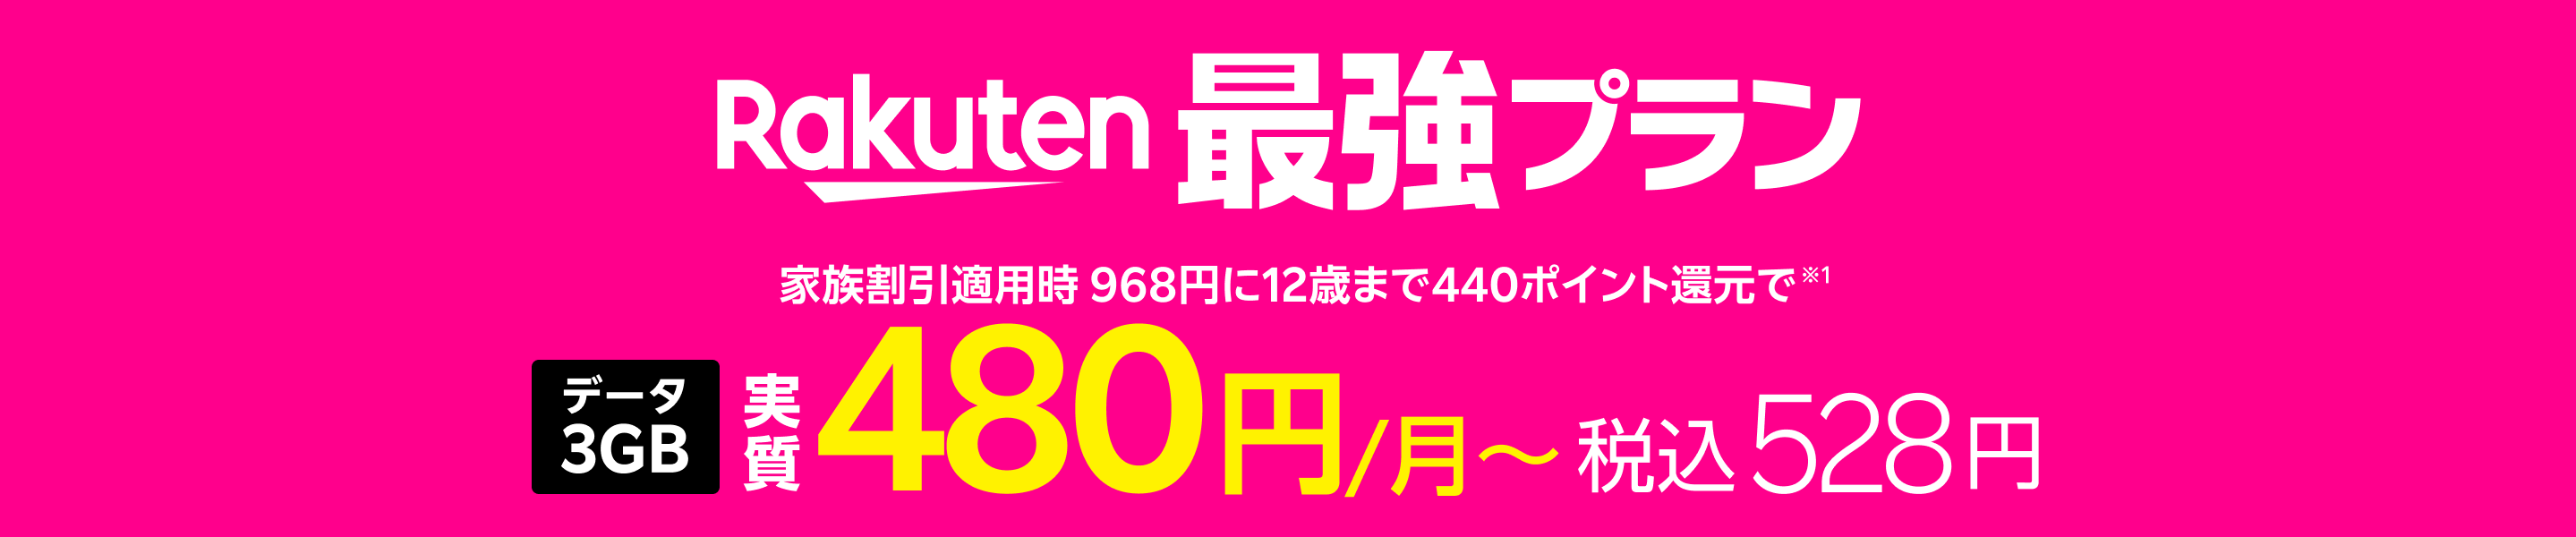 「Rakuten最強プラン」家族割引適用時968円に12歳まで440ポイント還元で※1 、3GBまで実質480円/月（税込528円）